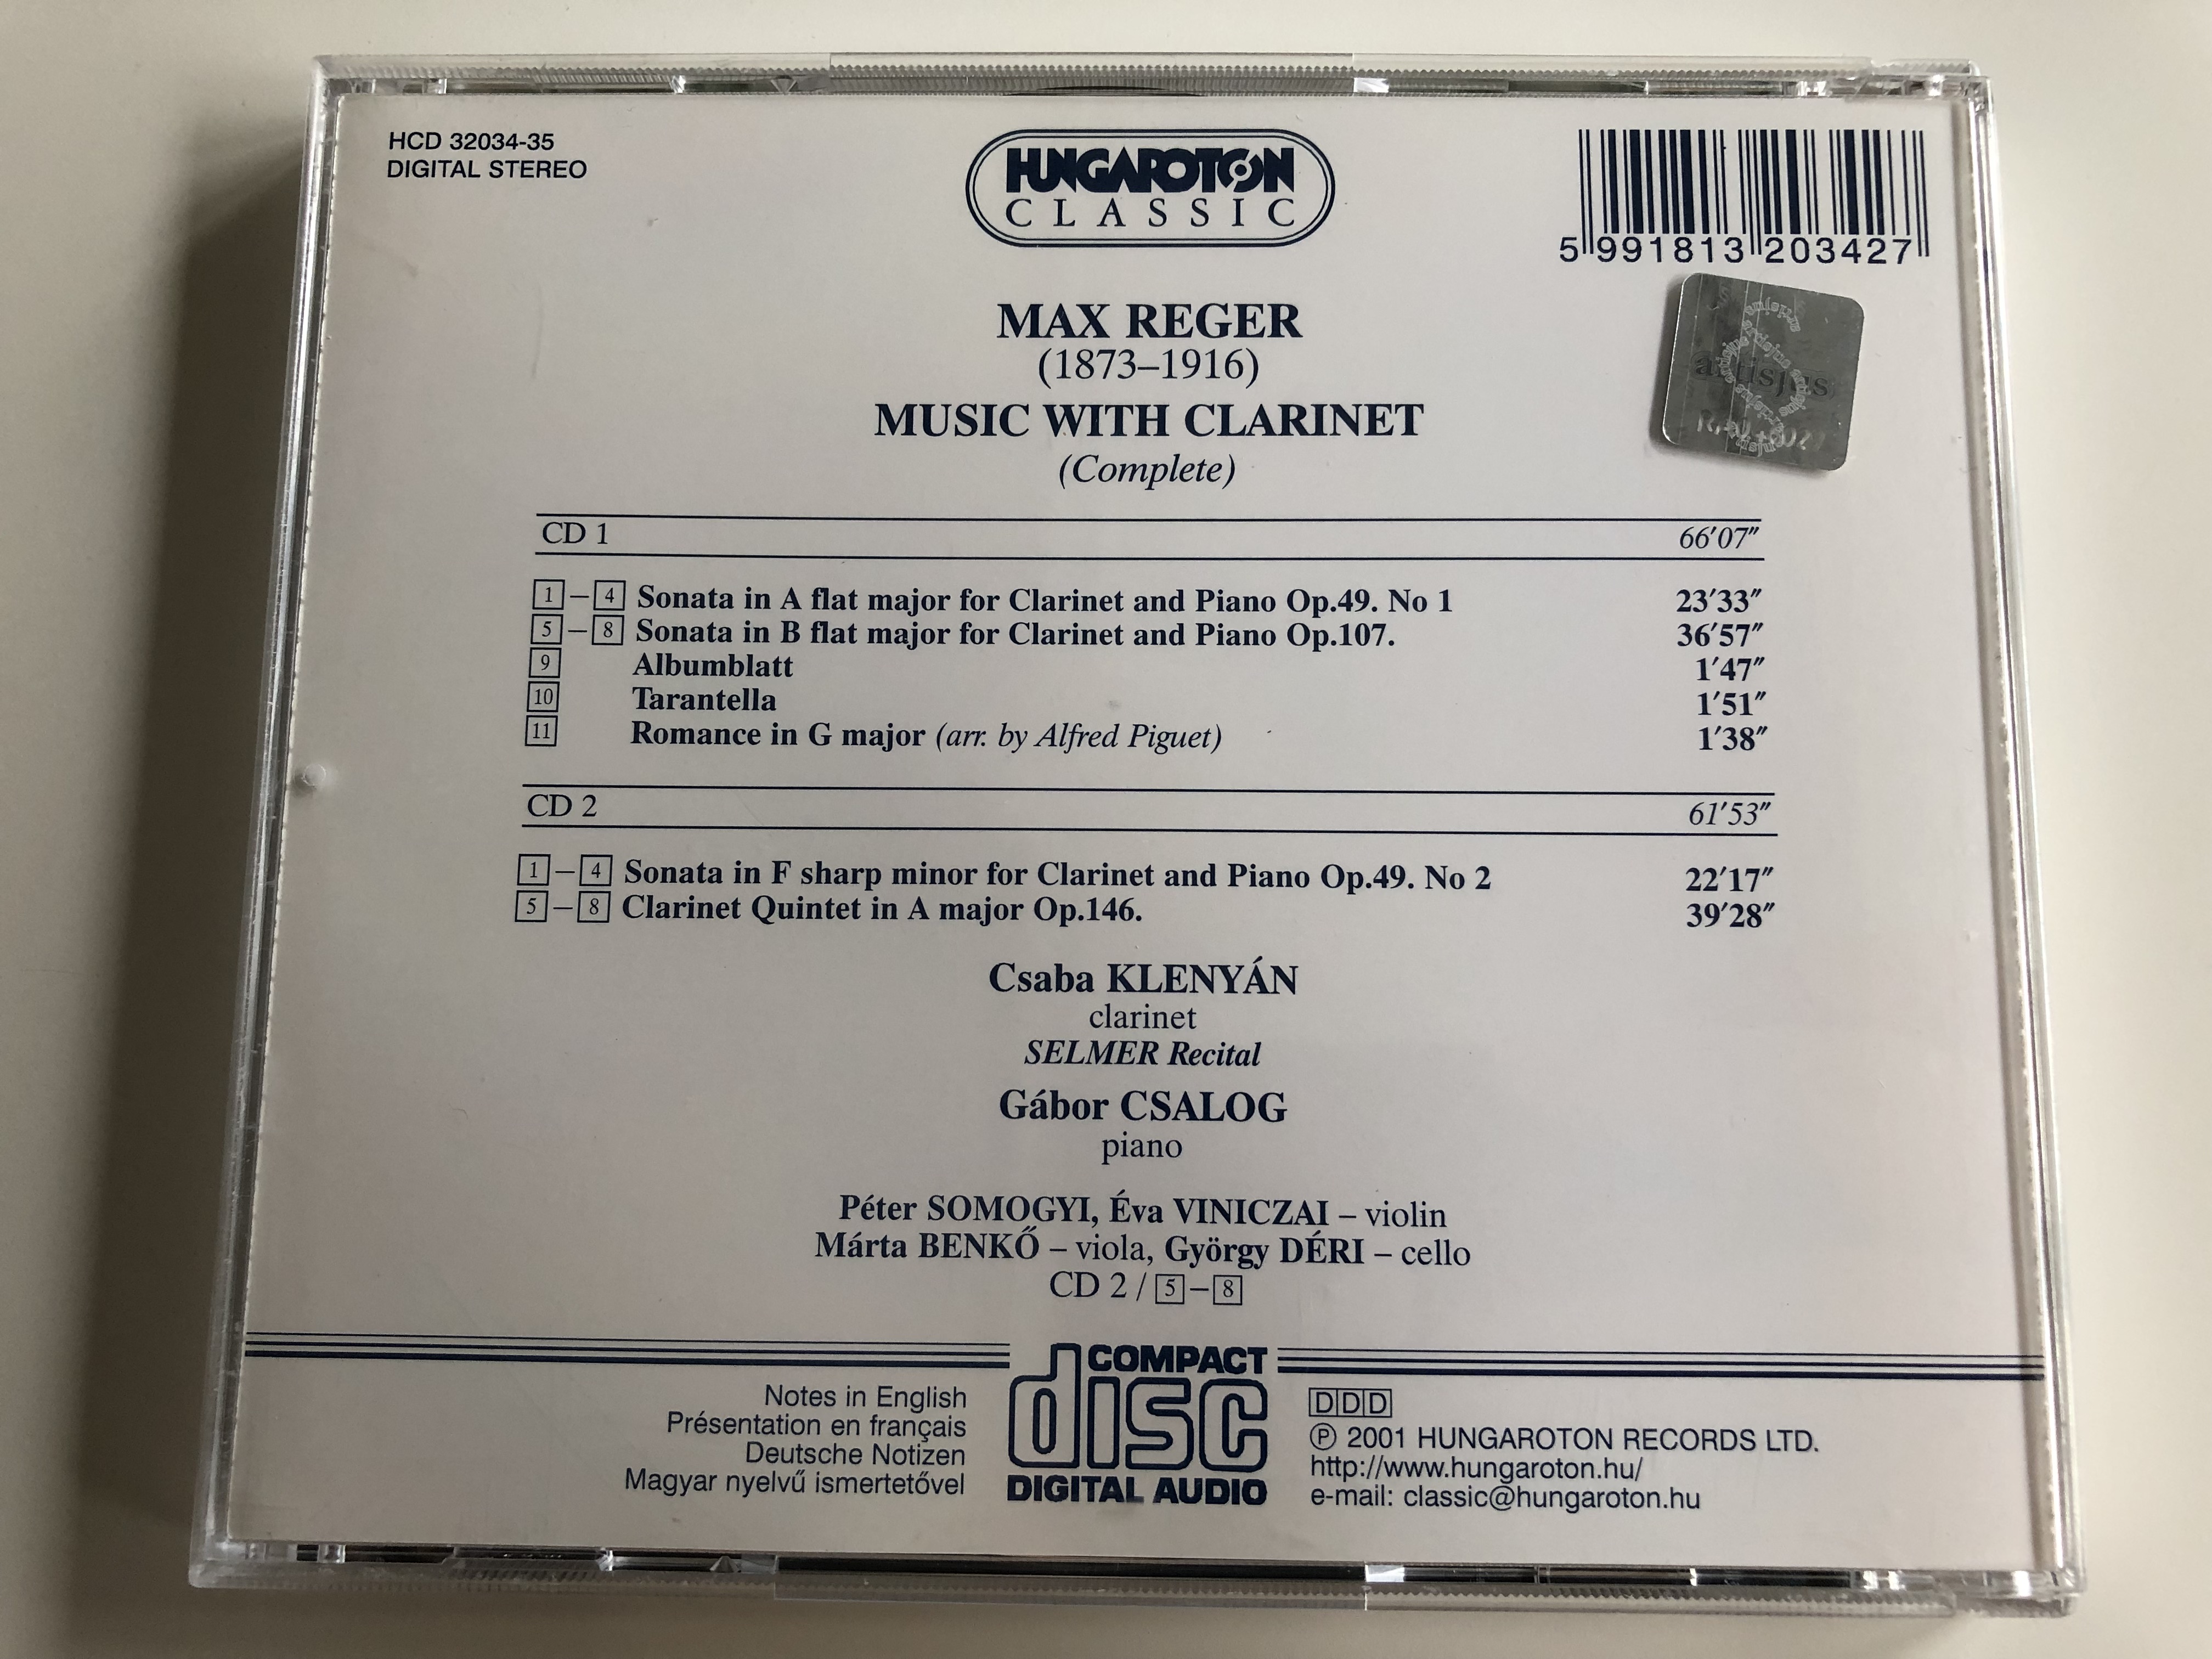 max-reger-music-with-clarinet-complete-csaba-kleny-n-clarinet-g-bor-csalog-piano-audio-cd-2001-hungaroton-classic-hcd-32034-35-10-.jpg